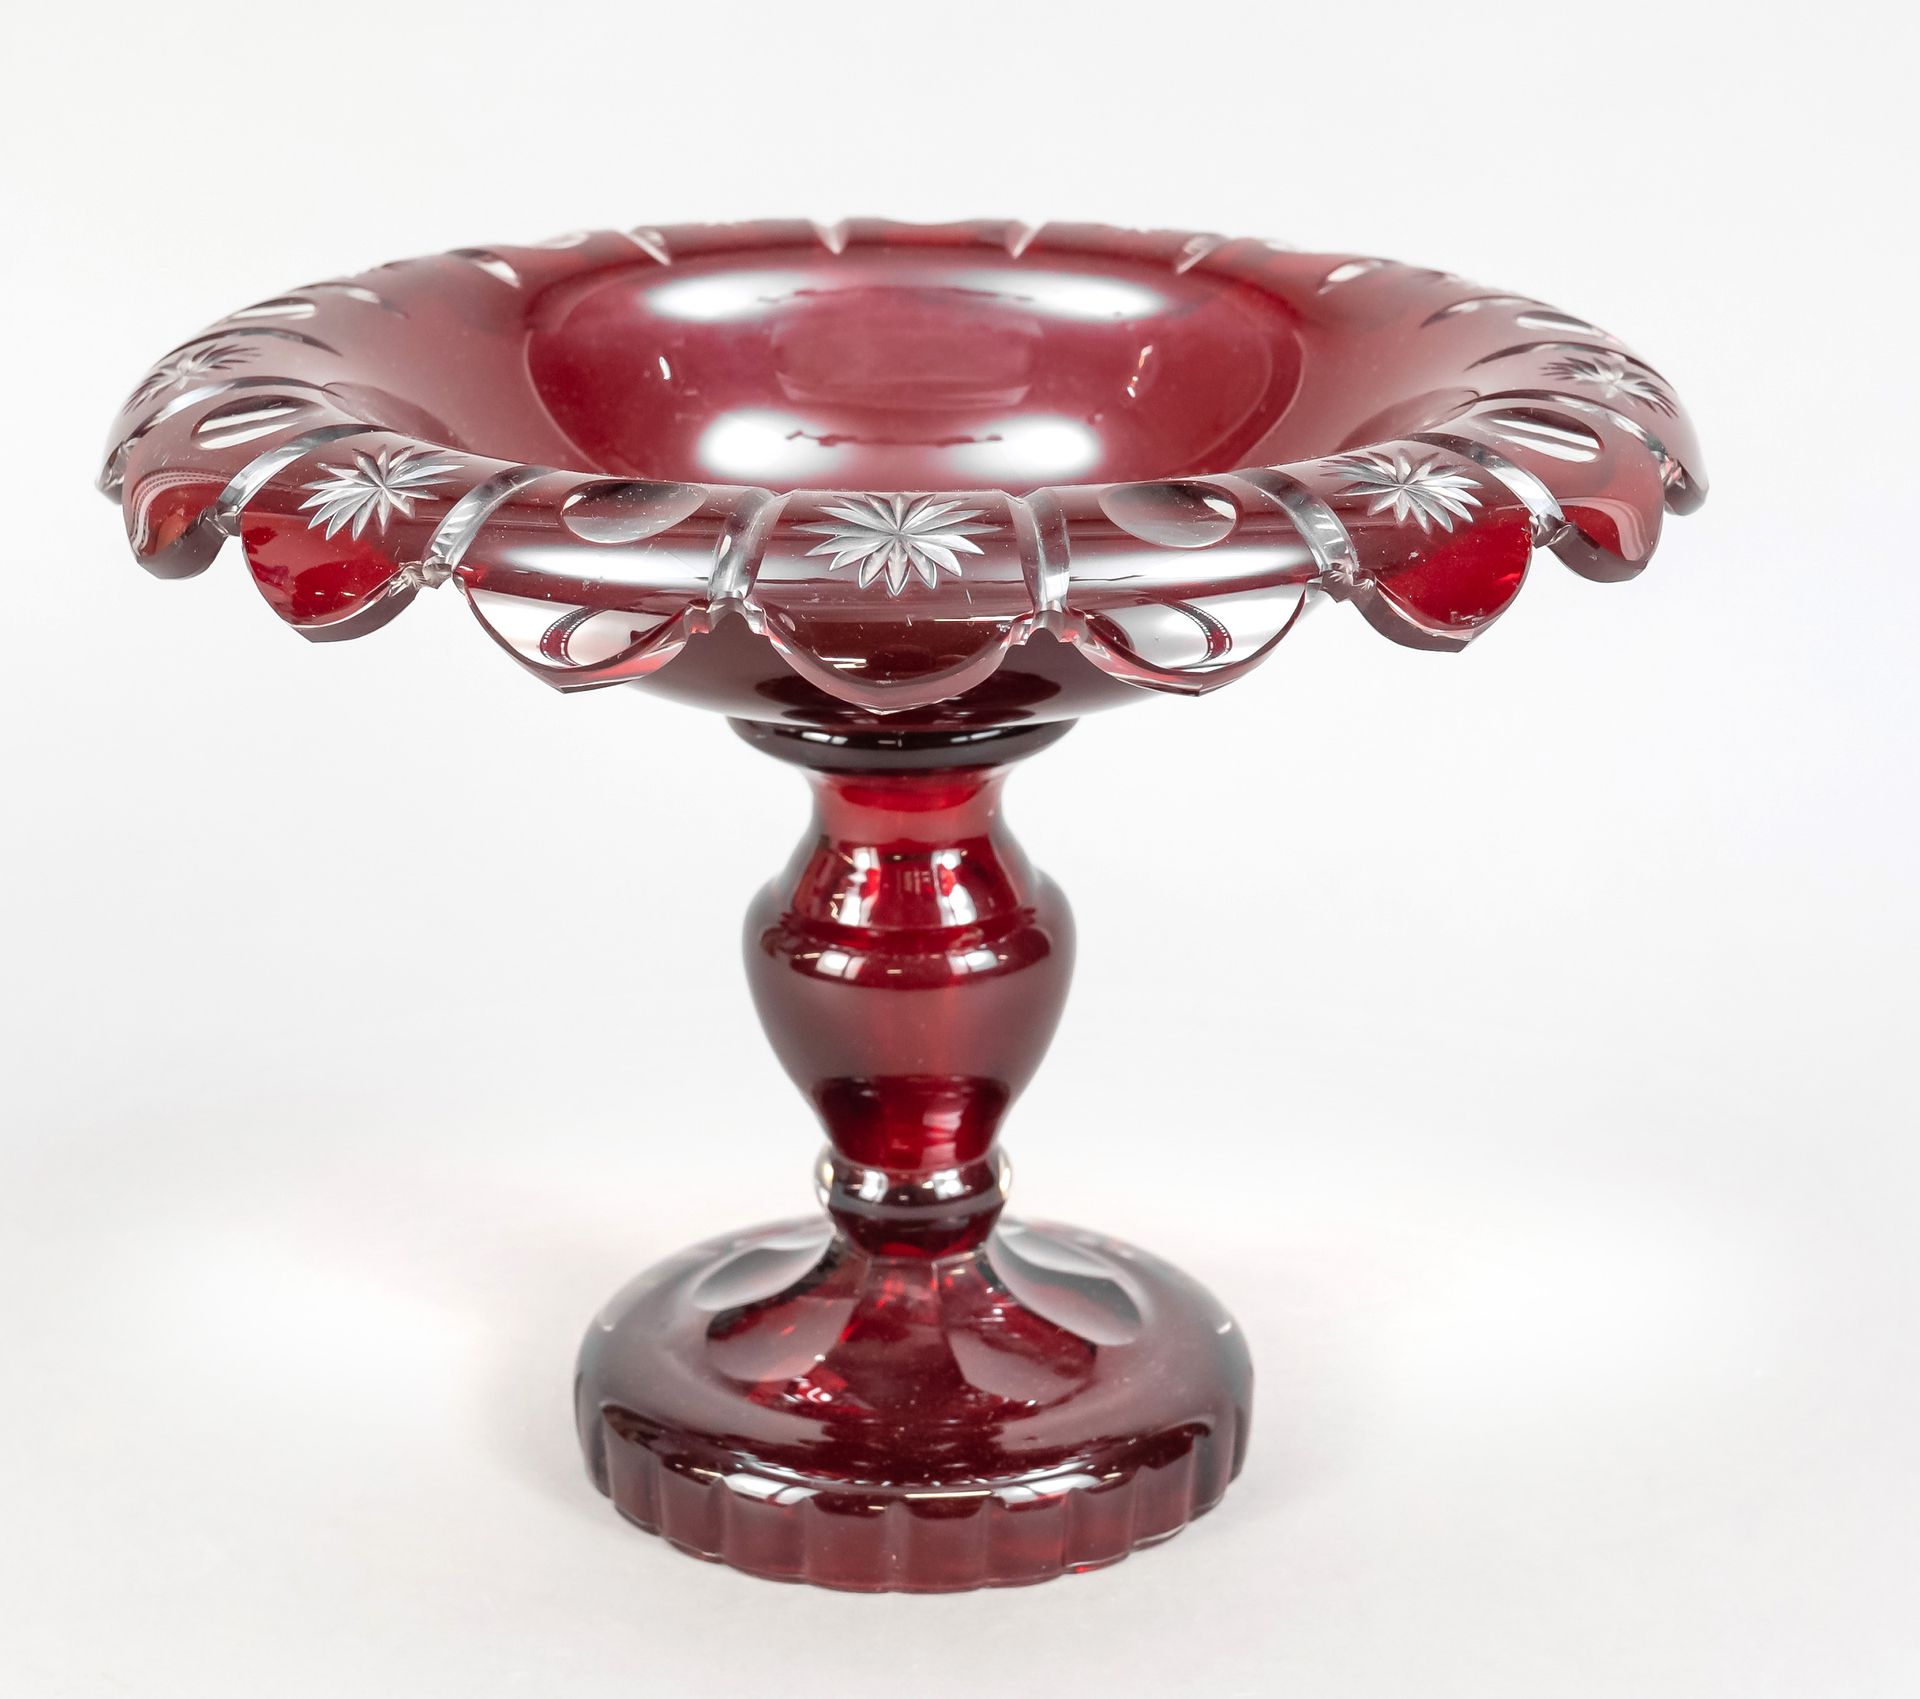 Null 大型圆形中心器，20世纪初，圆形拱形支架，花瓶形轴，花形碗，透明玻璃，主要是红色覆盖的星星和球形装饰，直径27厘米，高20厘米